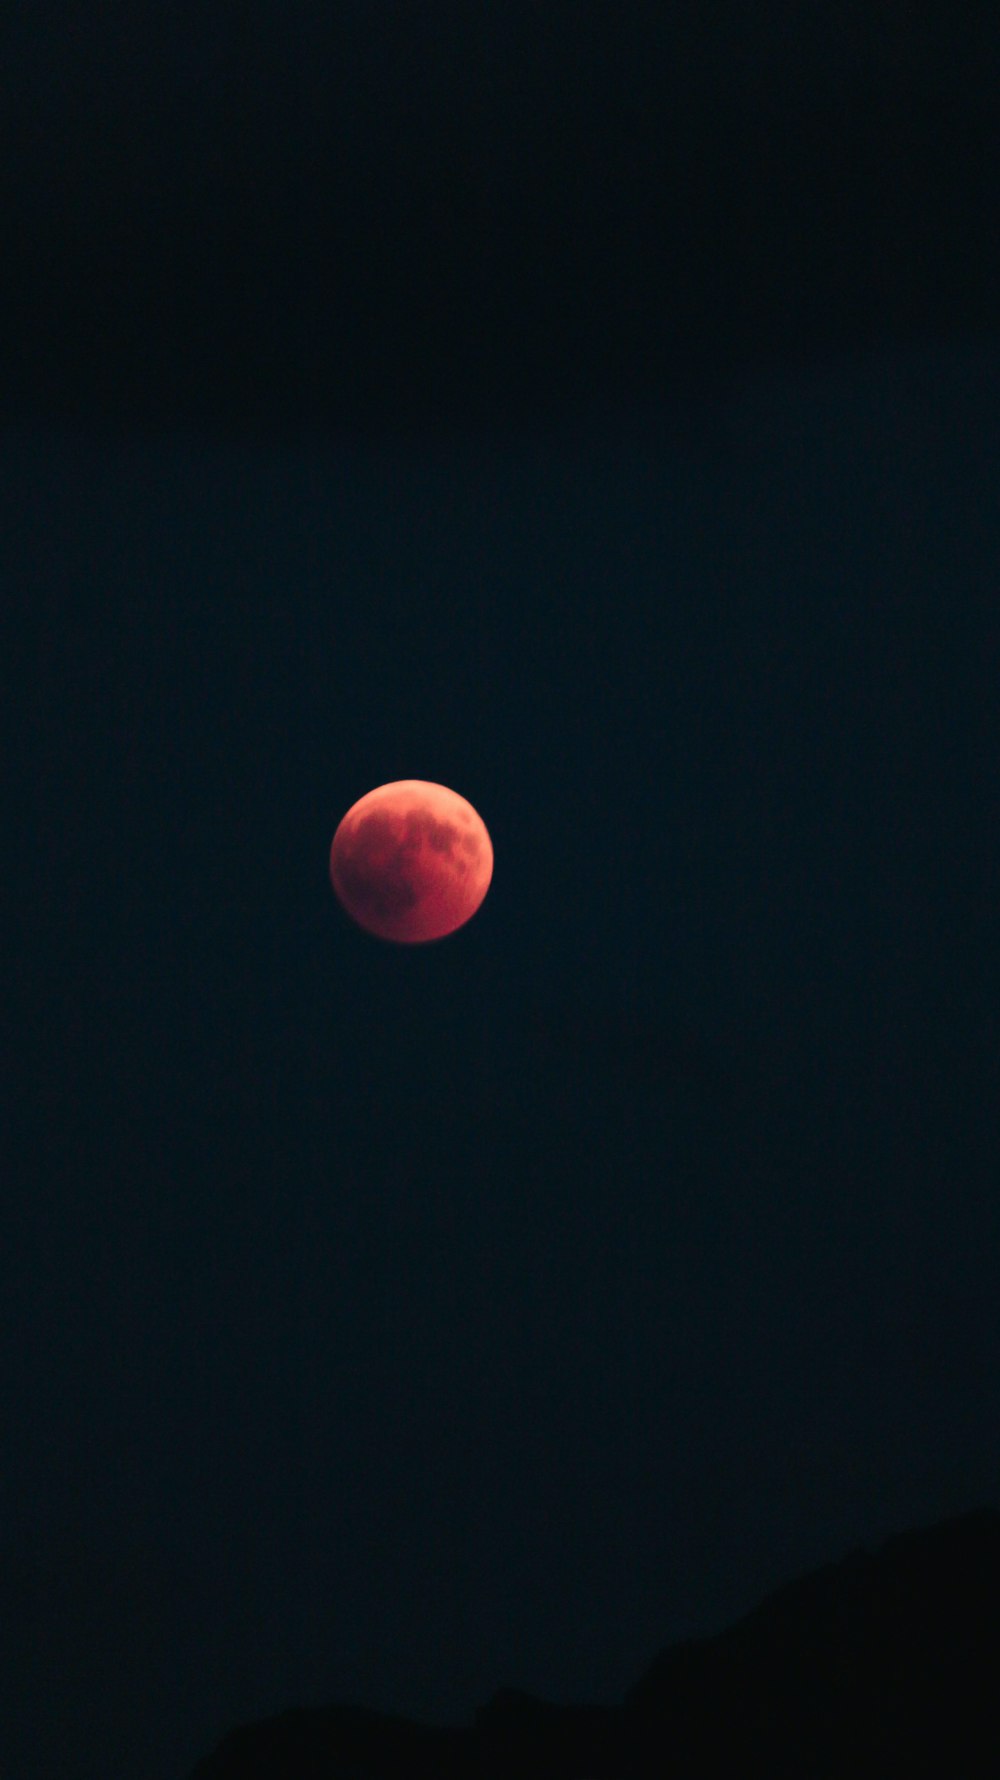 blood moon at night